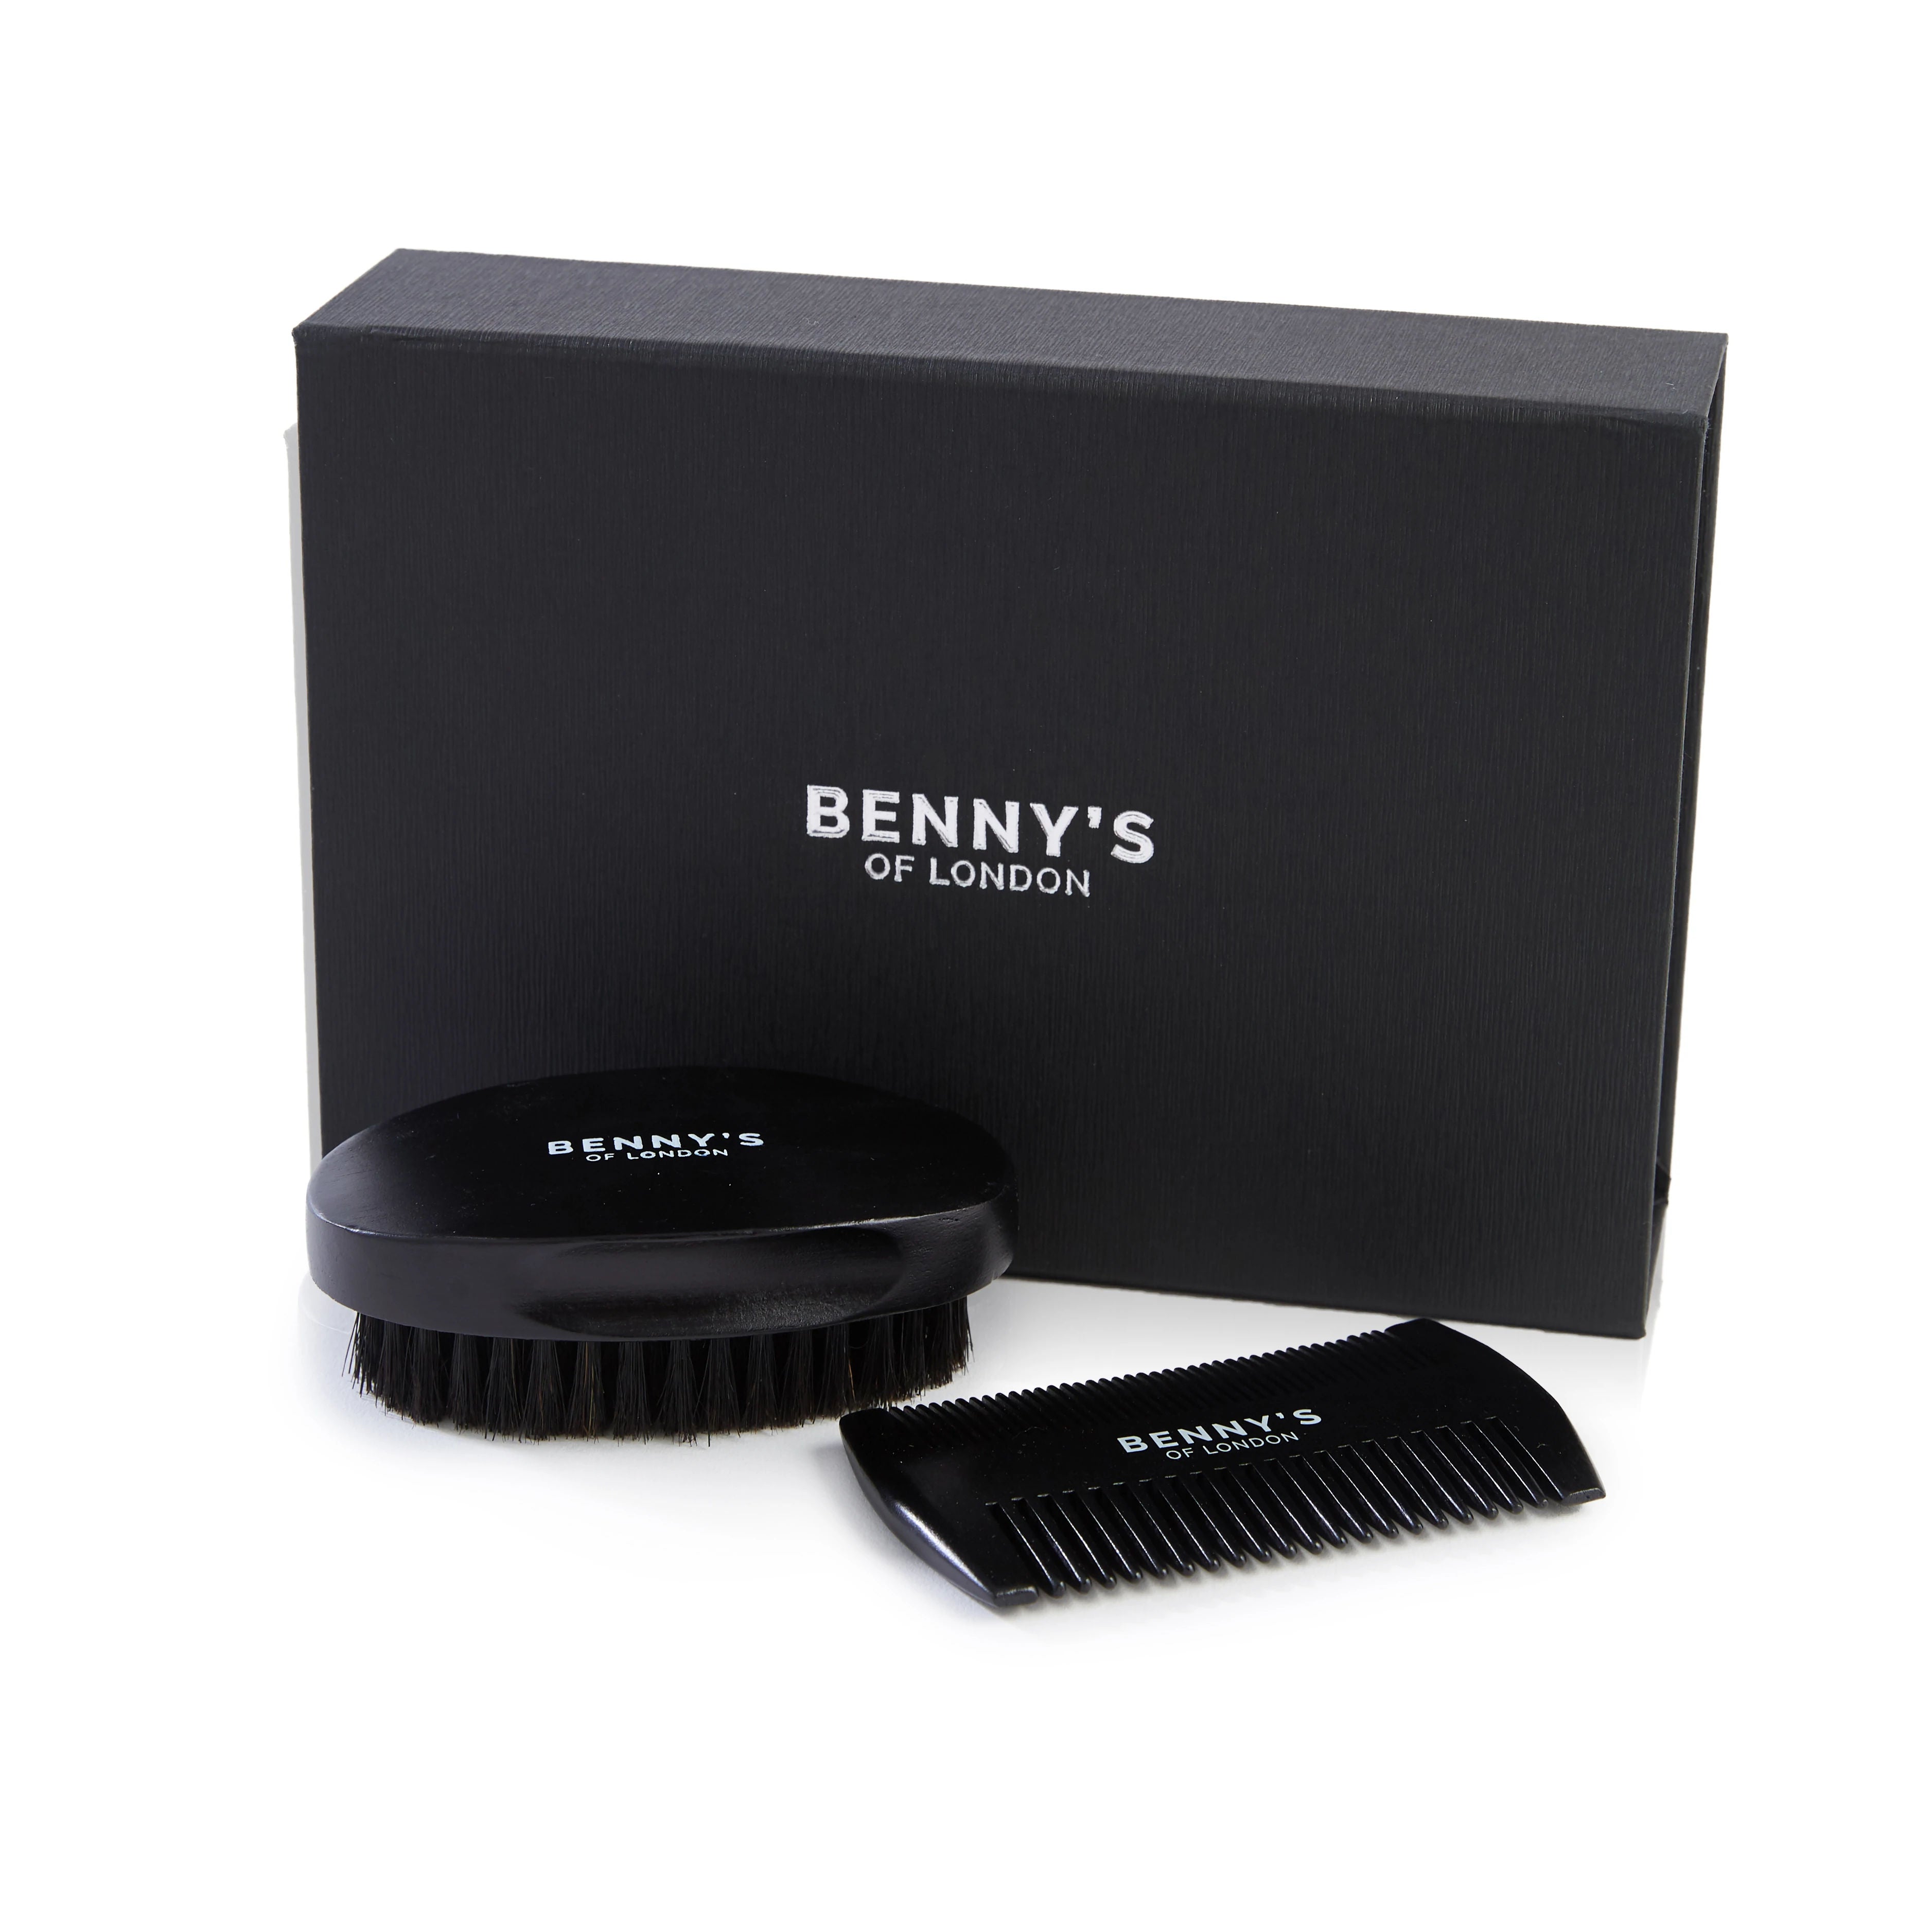 Benny's of London Beard Brush & Comb Gift Set